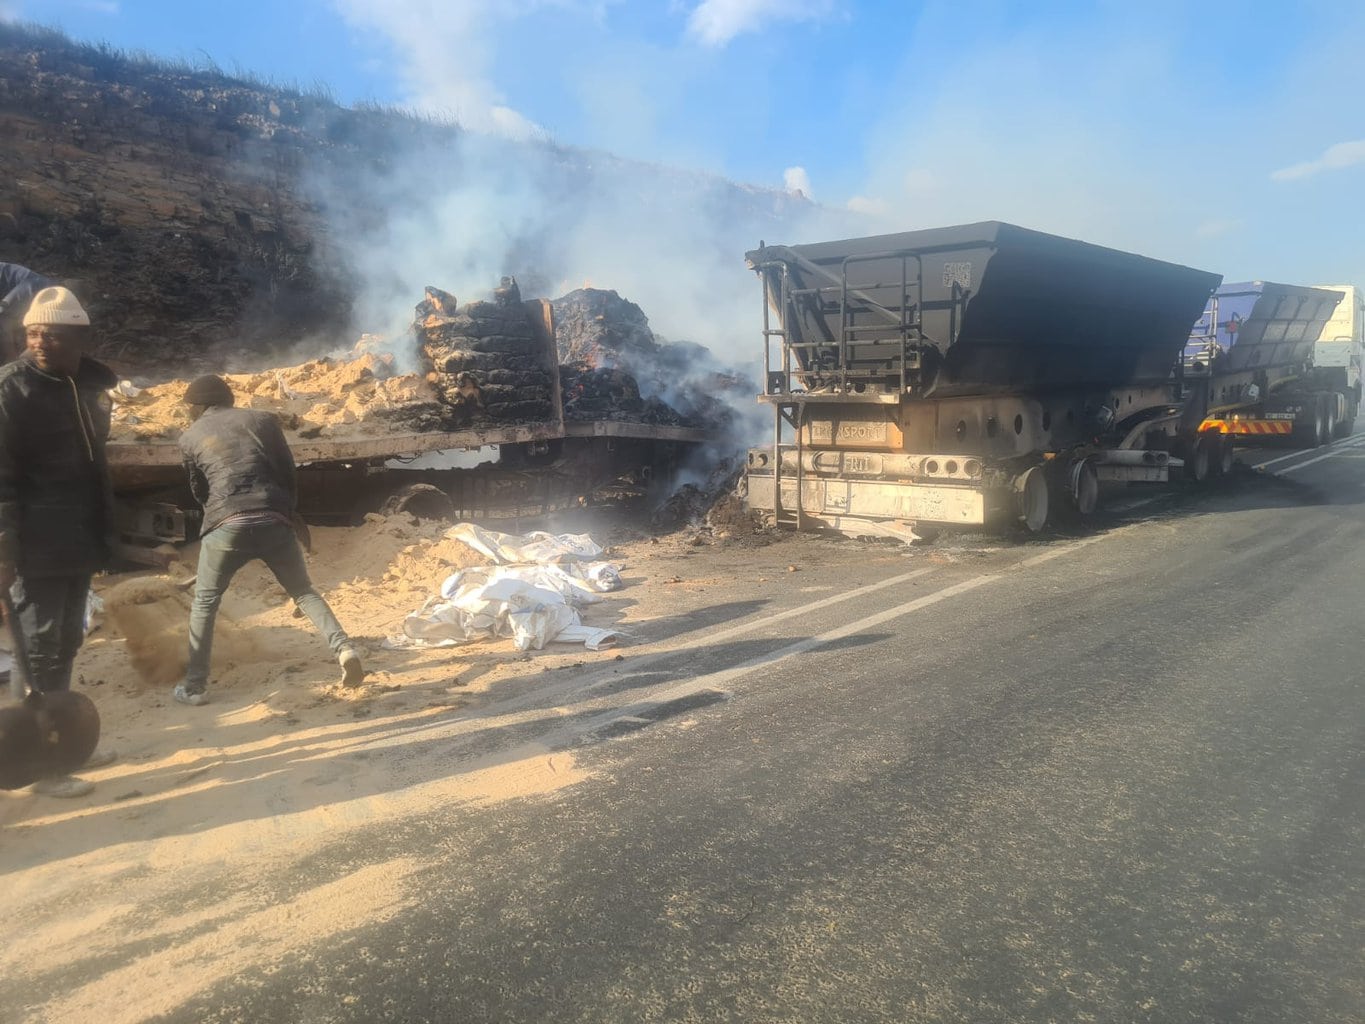 Five more trucks are on fire in Mpumalanga